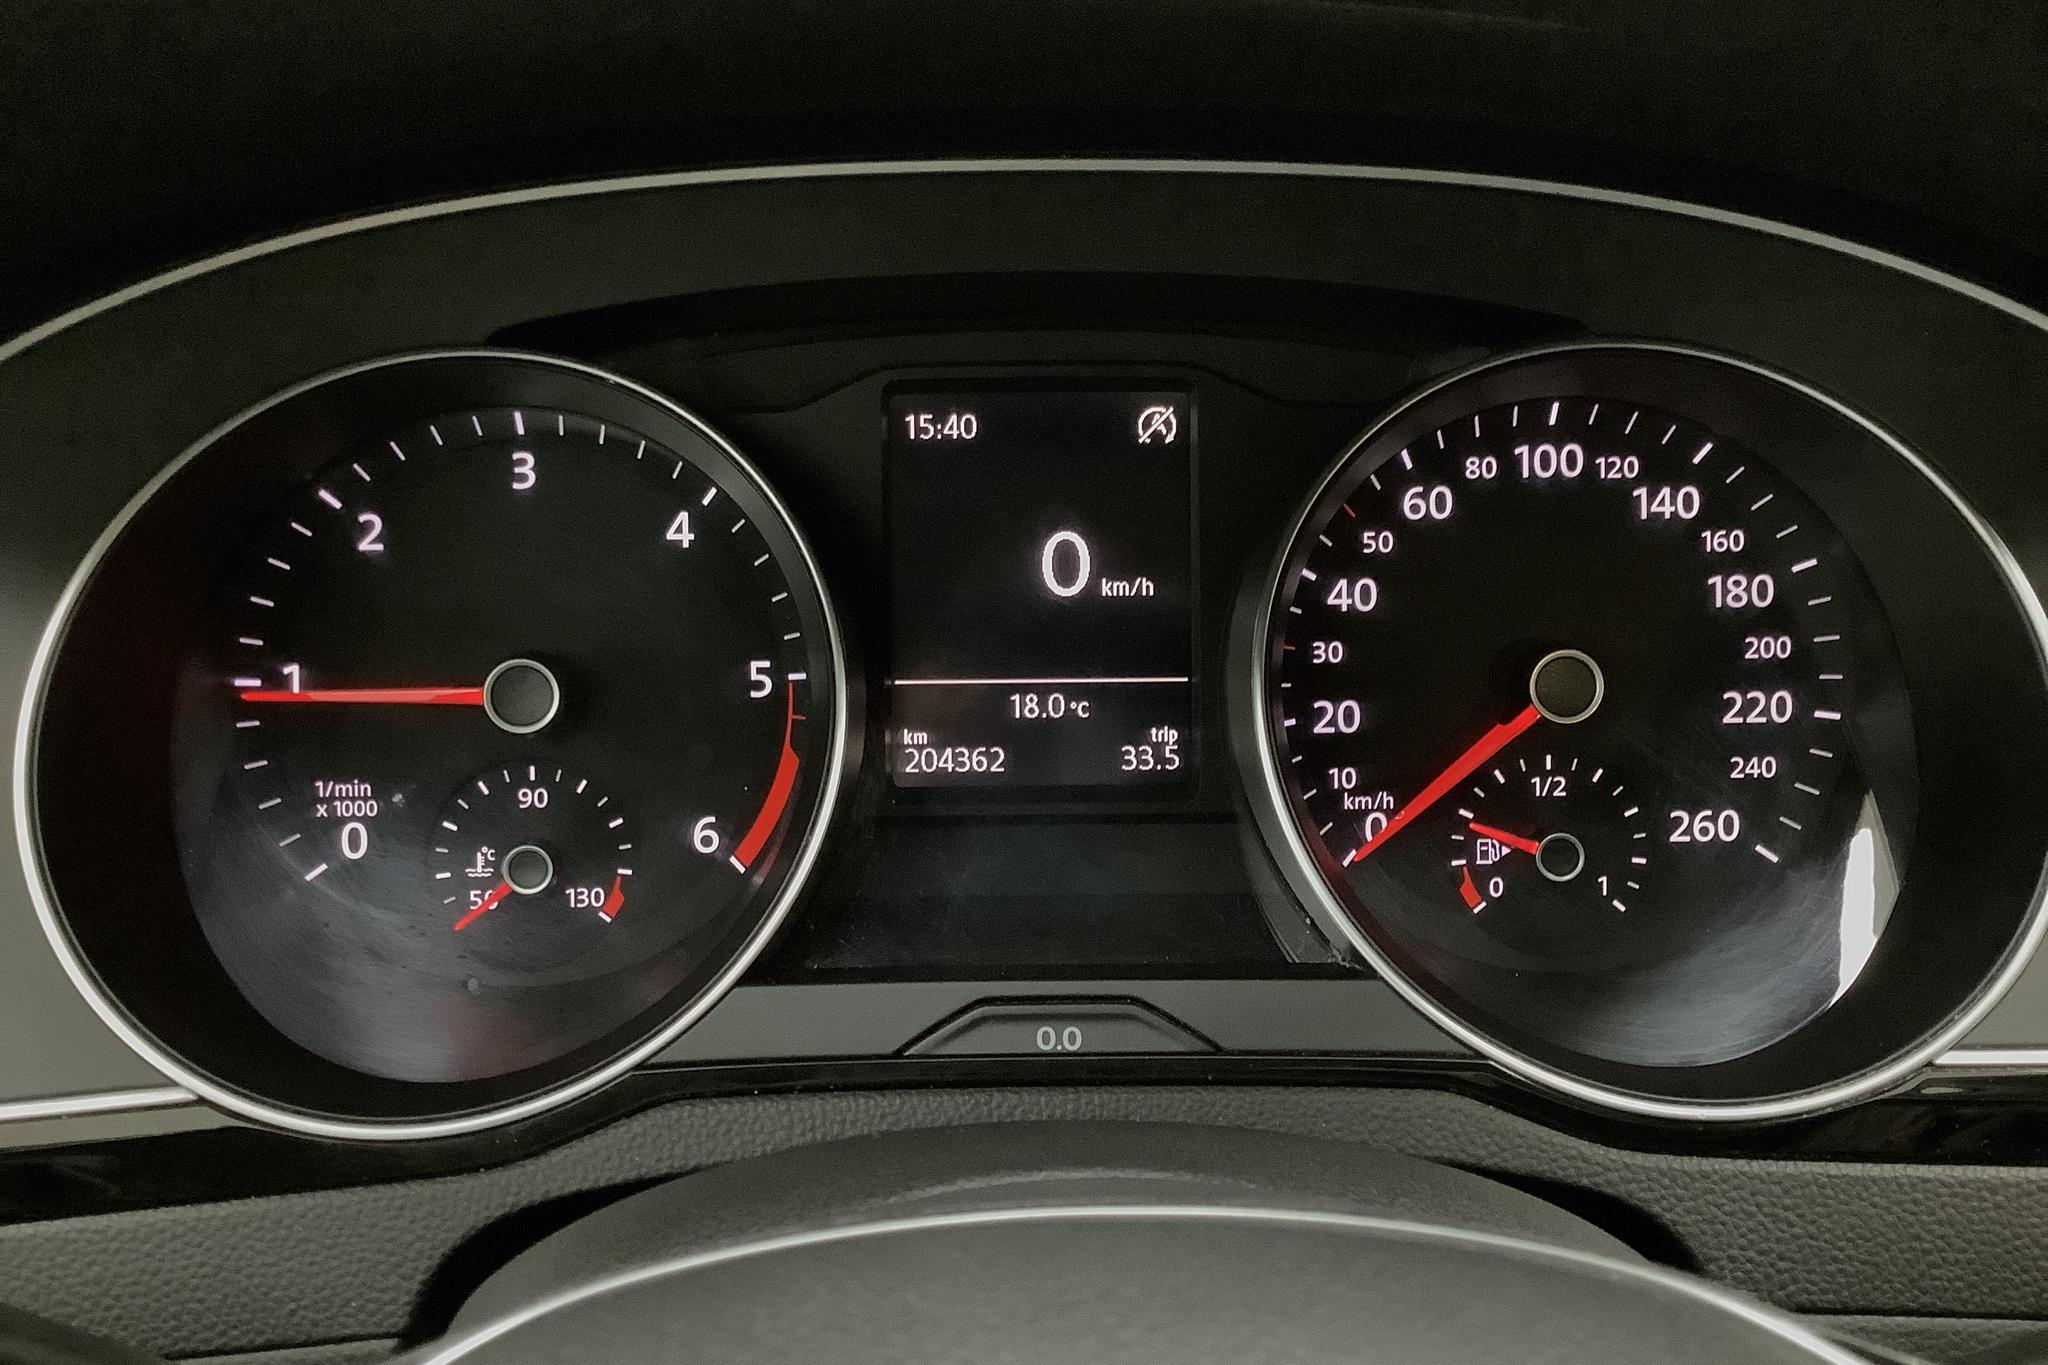 VW Passat 2.0 TDI Sportscombi 4MOTION (150hk) - 204 370 km - Manual - white - 2017